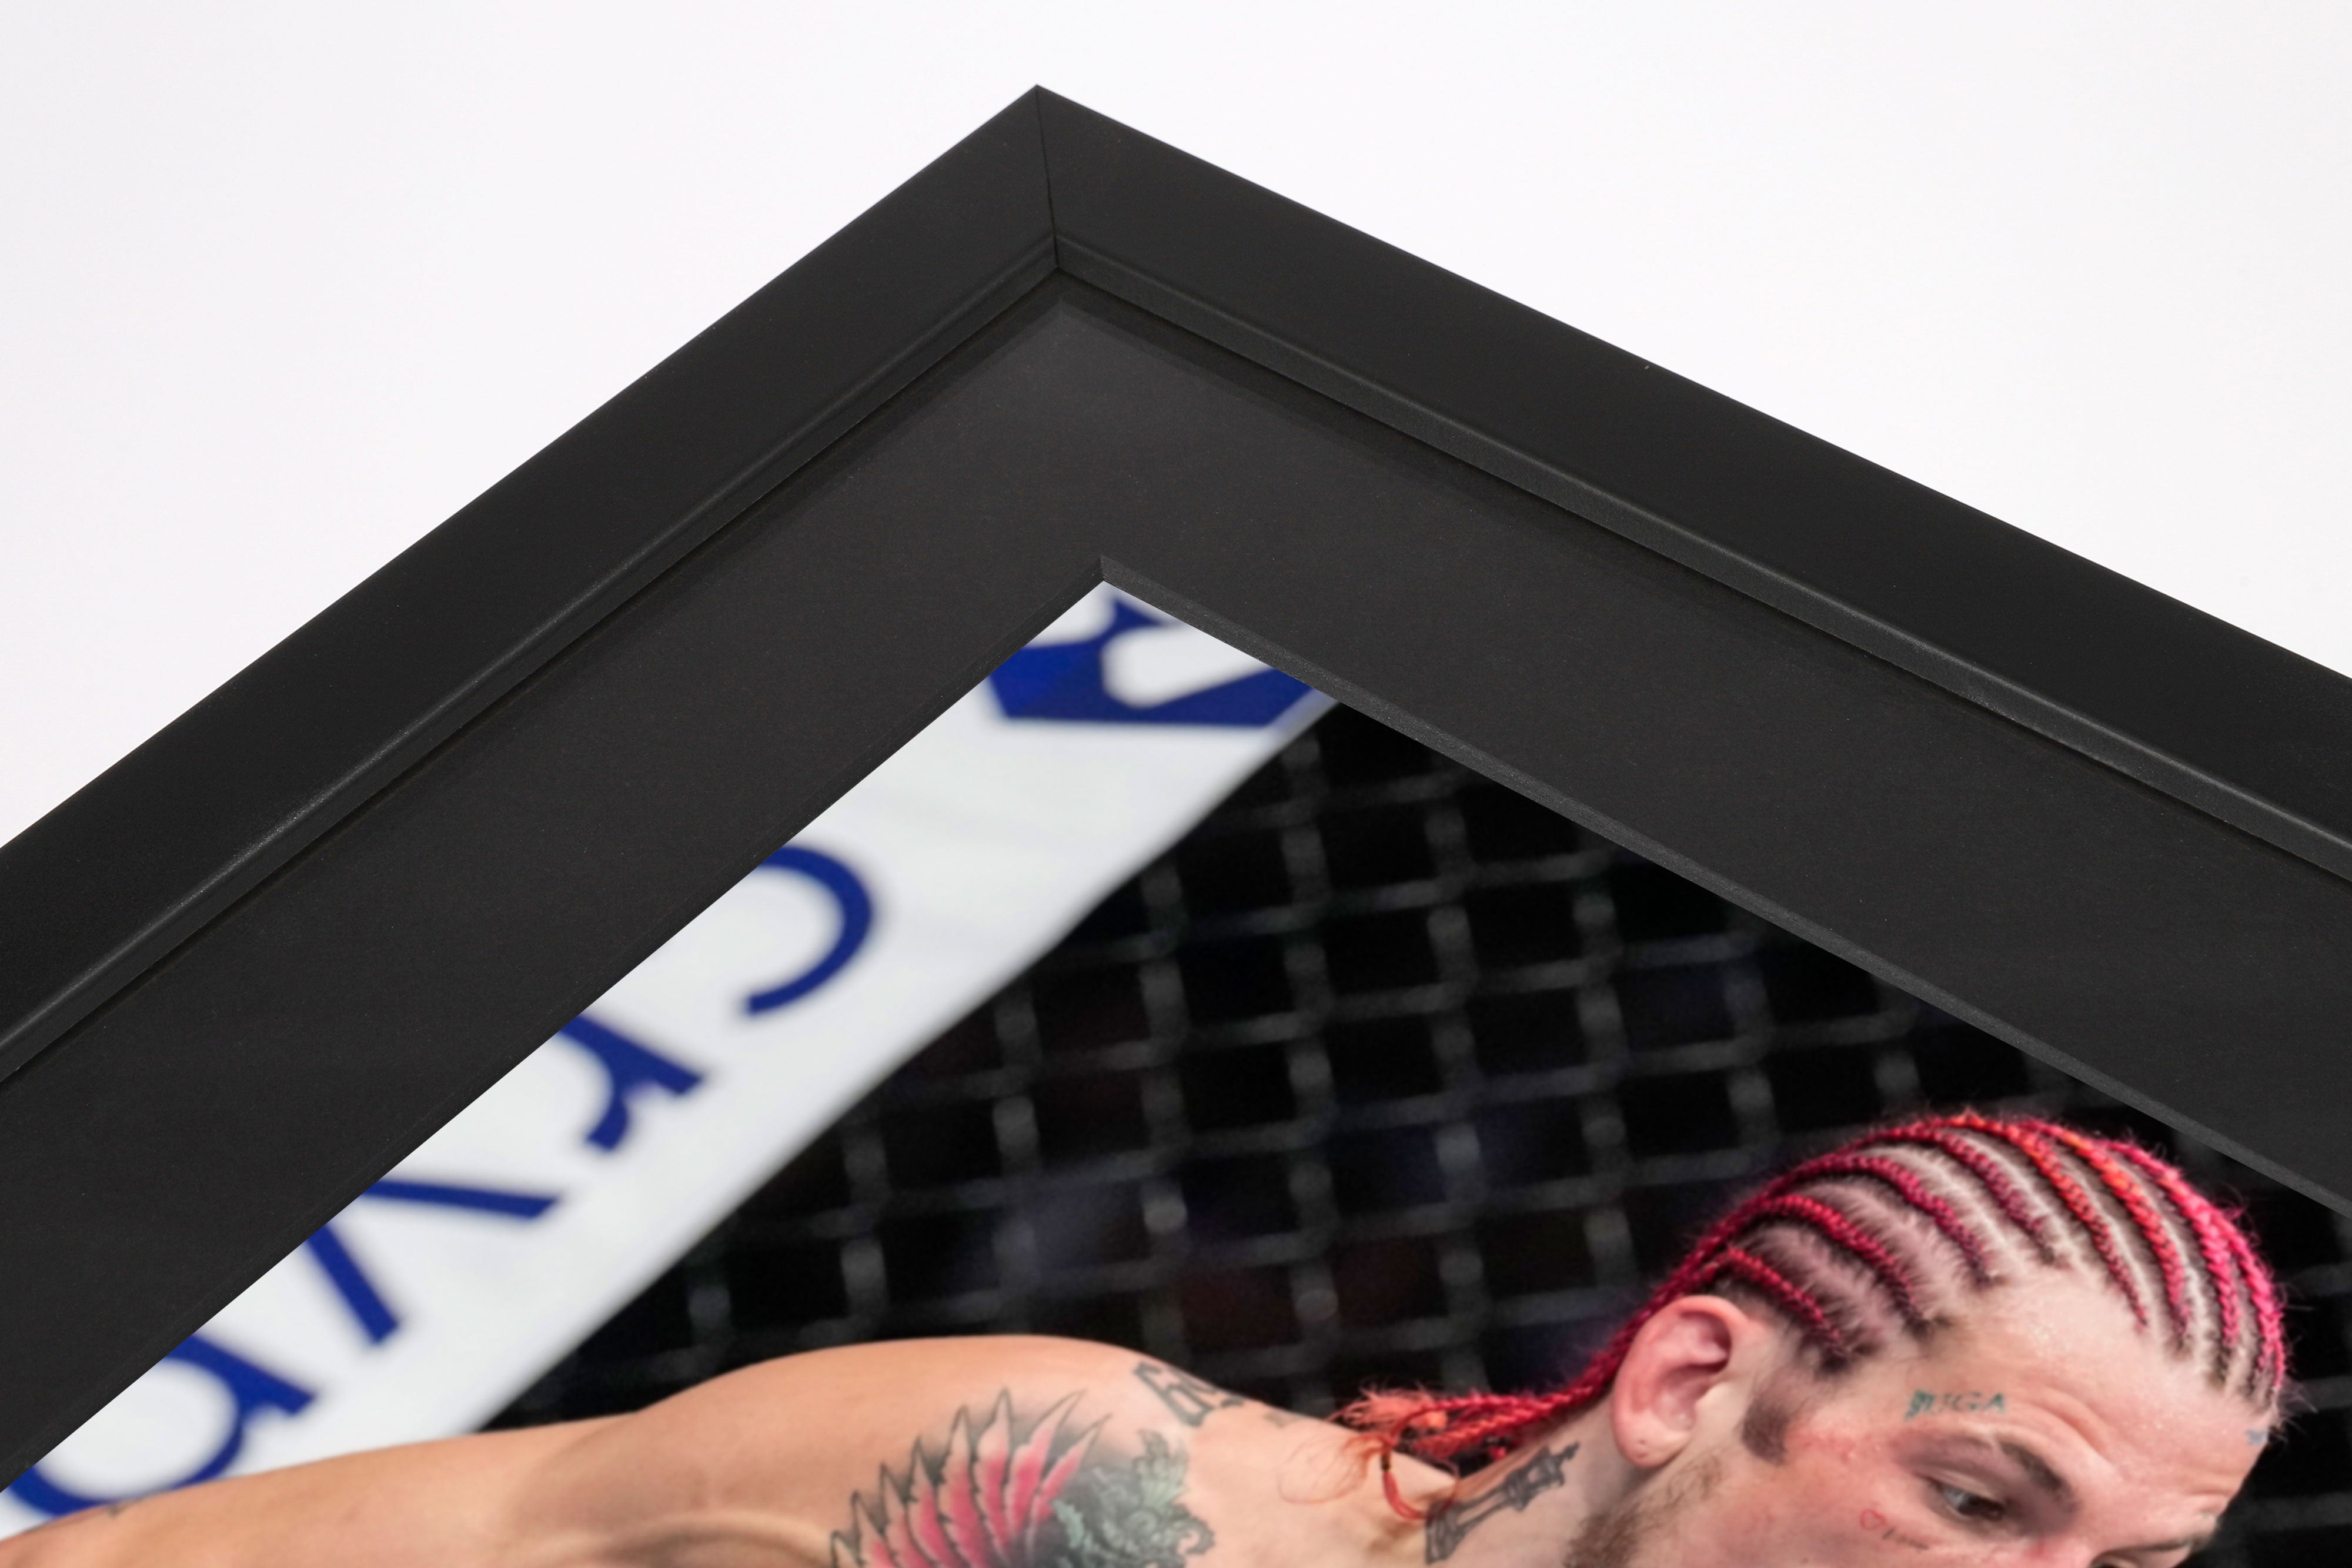 Sean O'Malley Framed Photo UFC 280: Oliveira vs. Makhachev V2